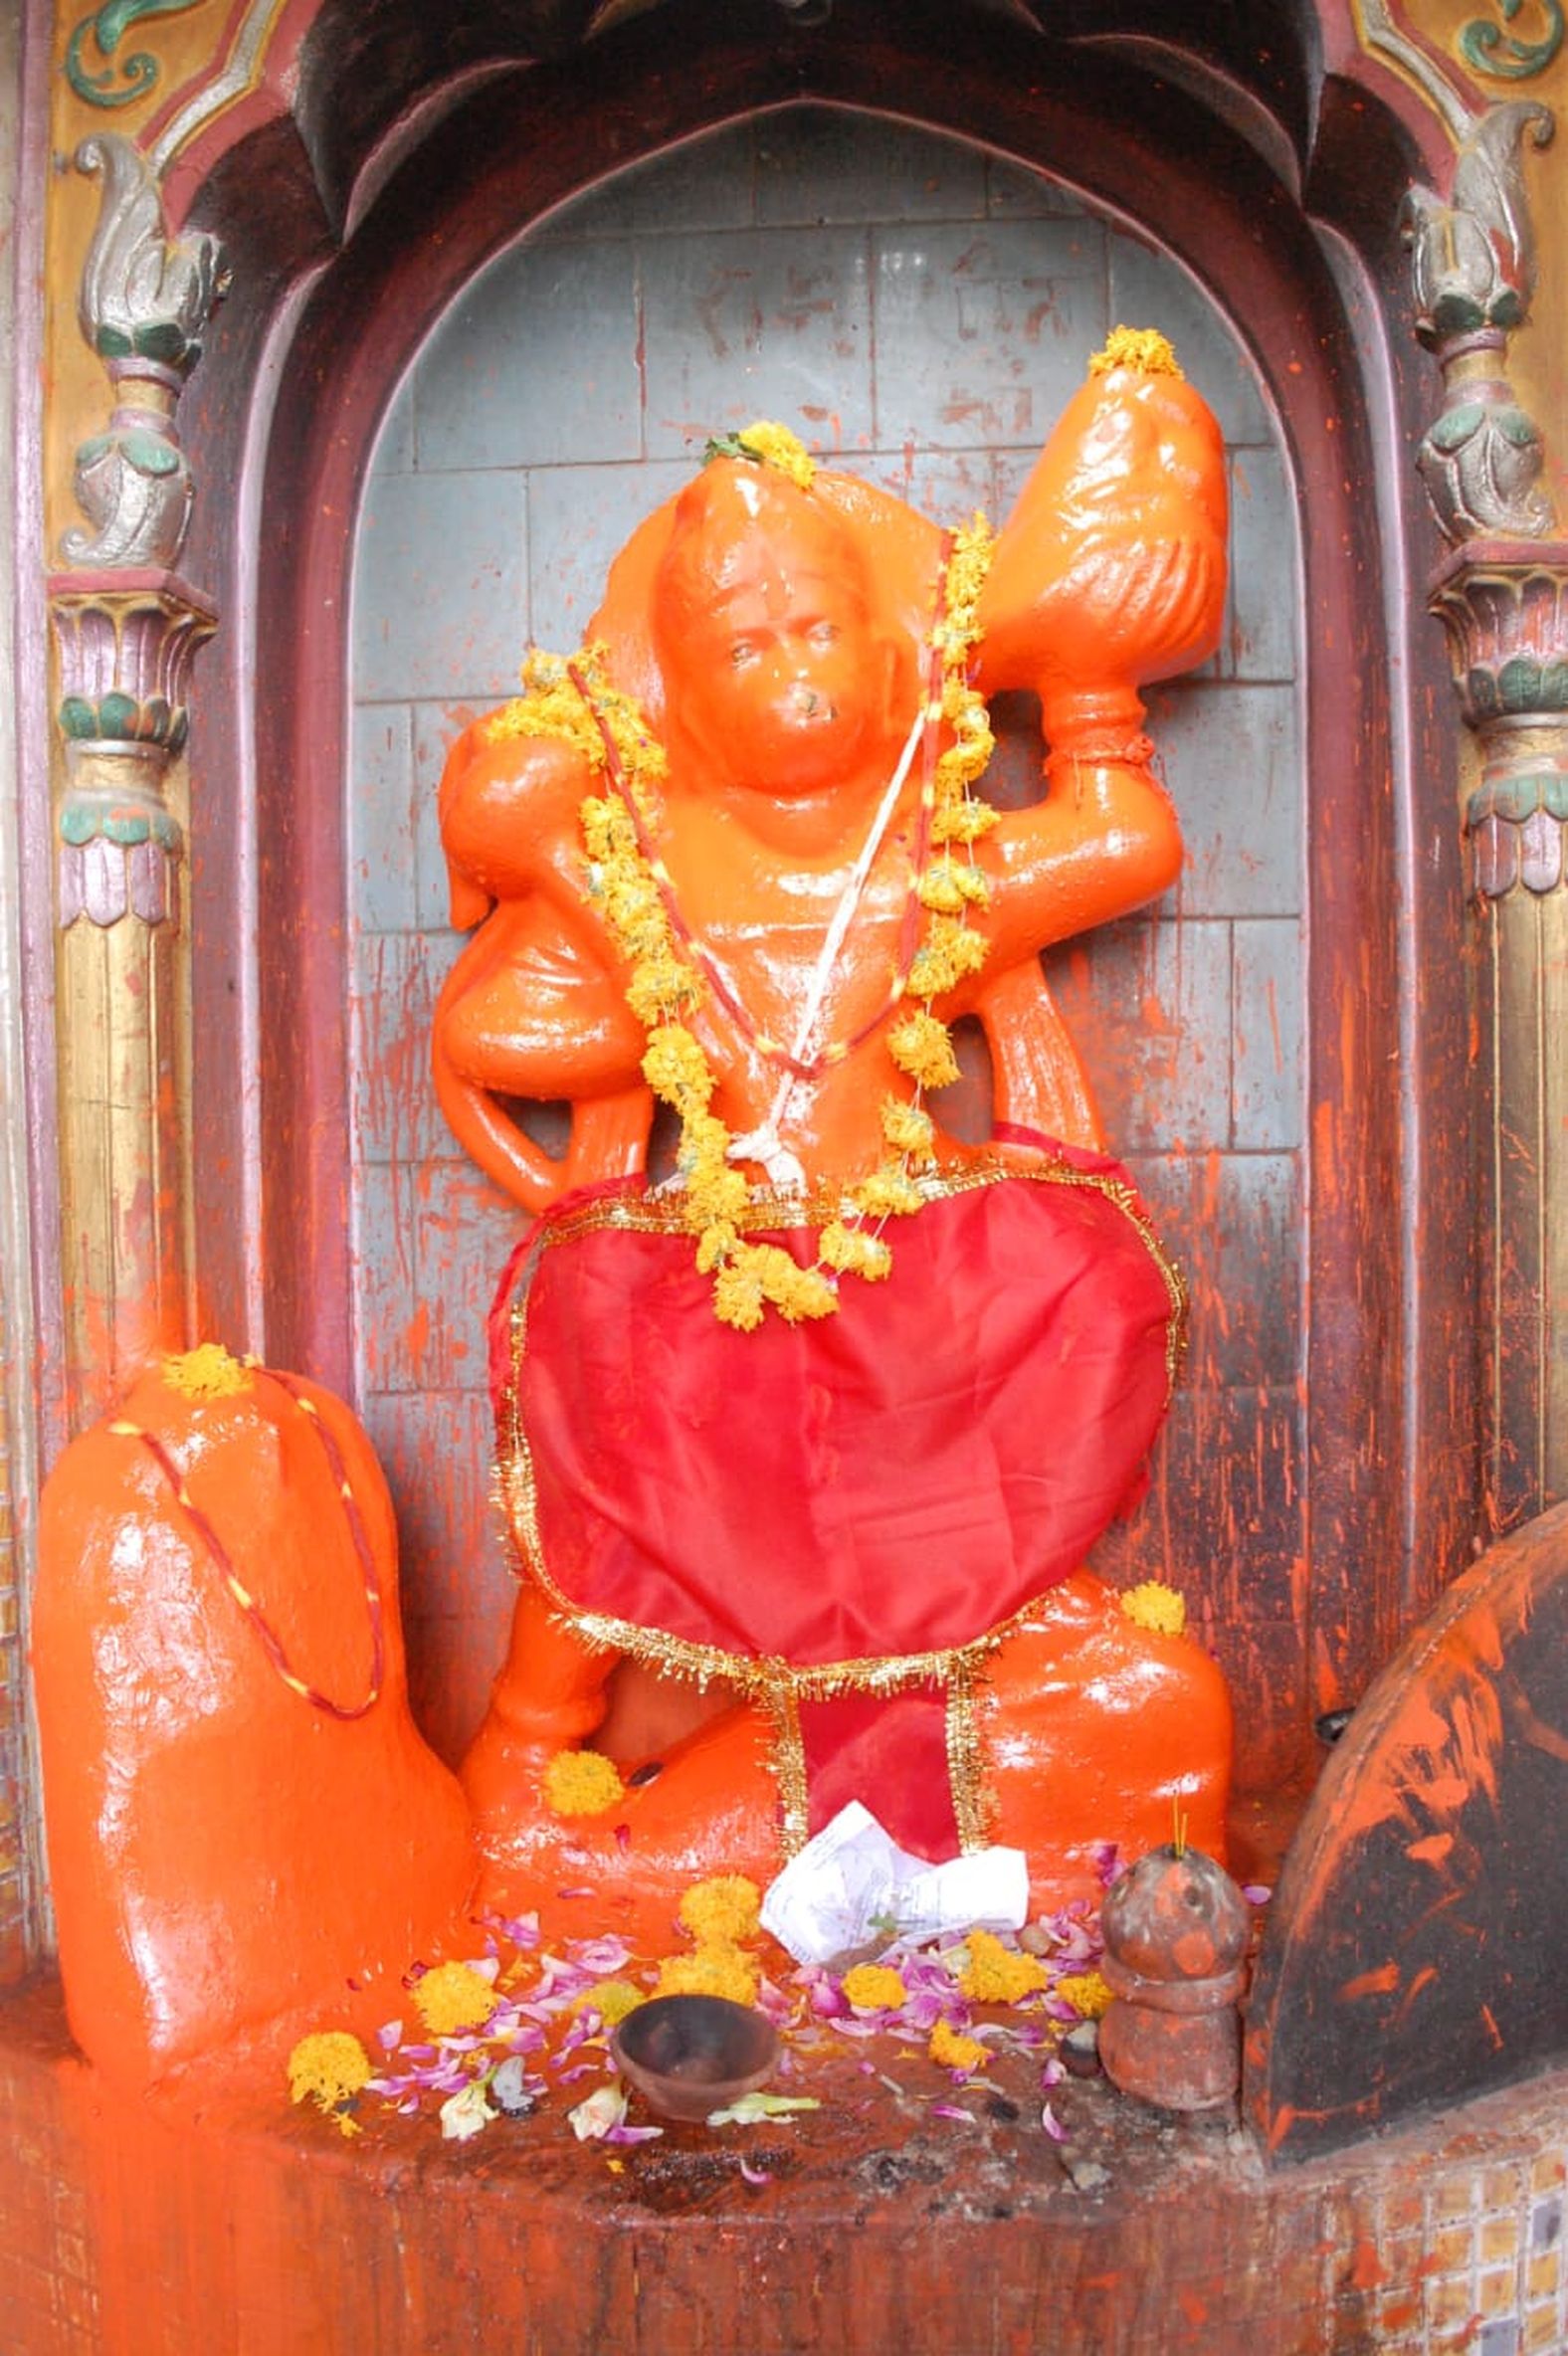 Hanuman Jayanti 